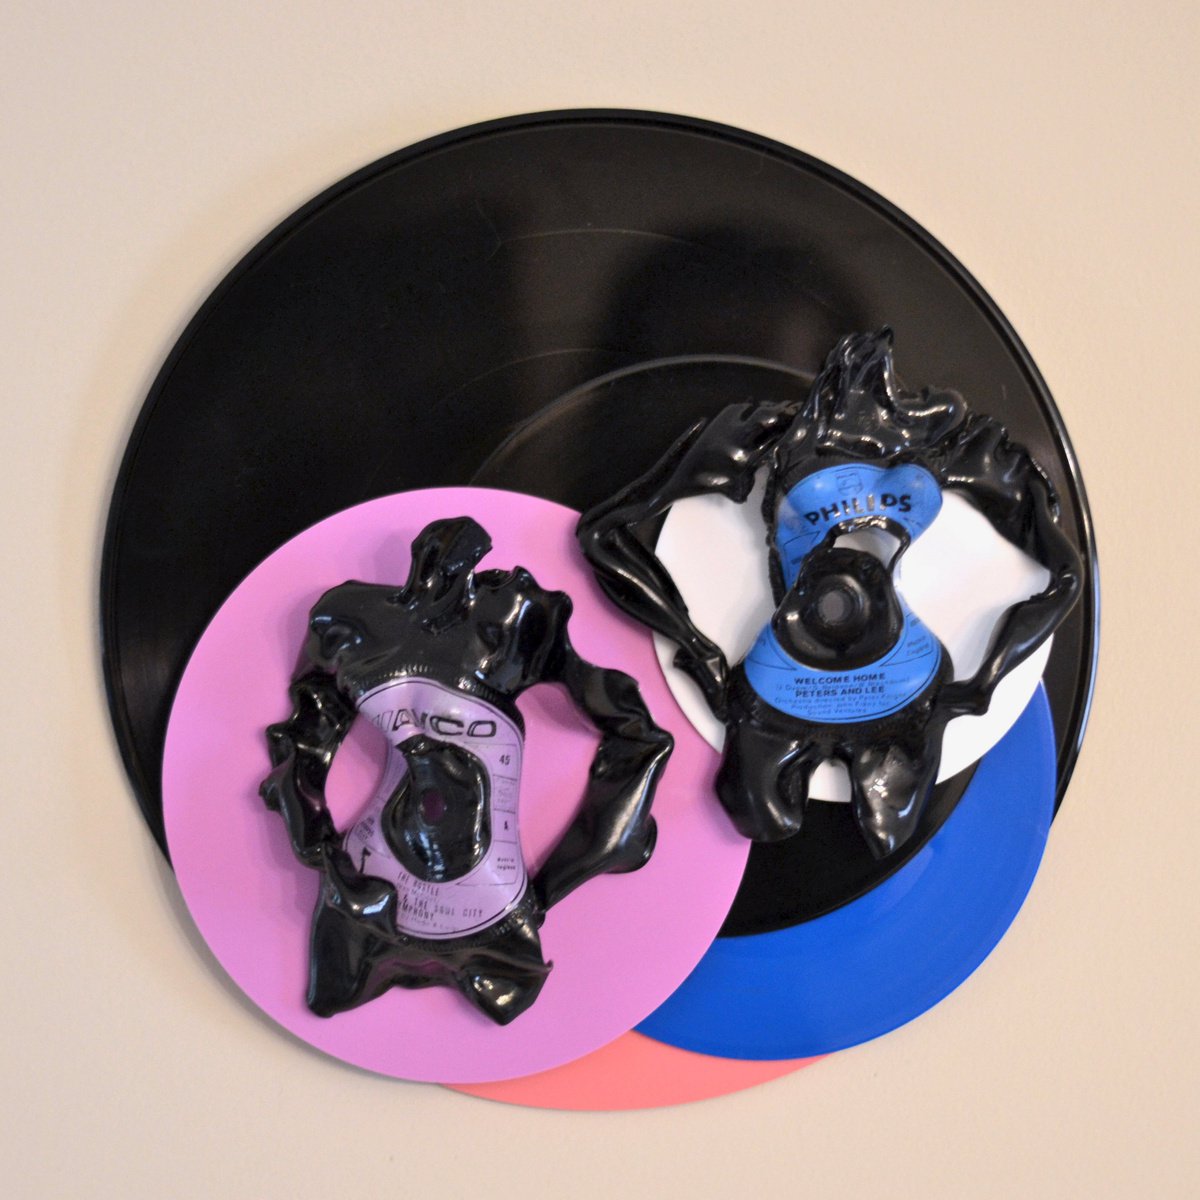 Vinyl Music Record Sculpture - Hustle on Home by Seona Mason